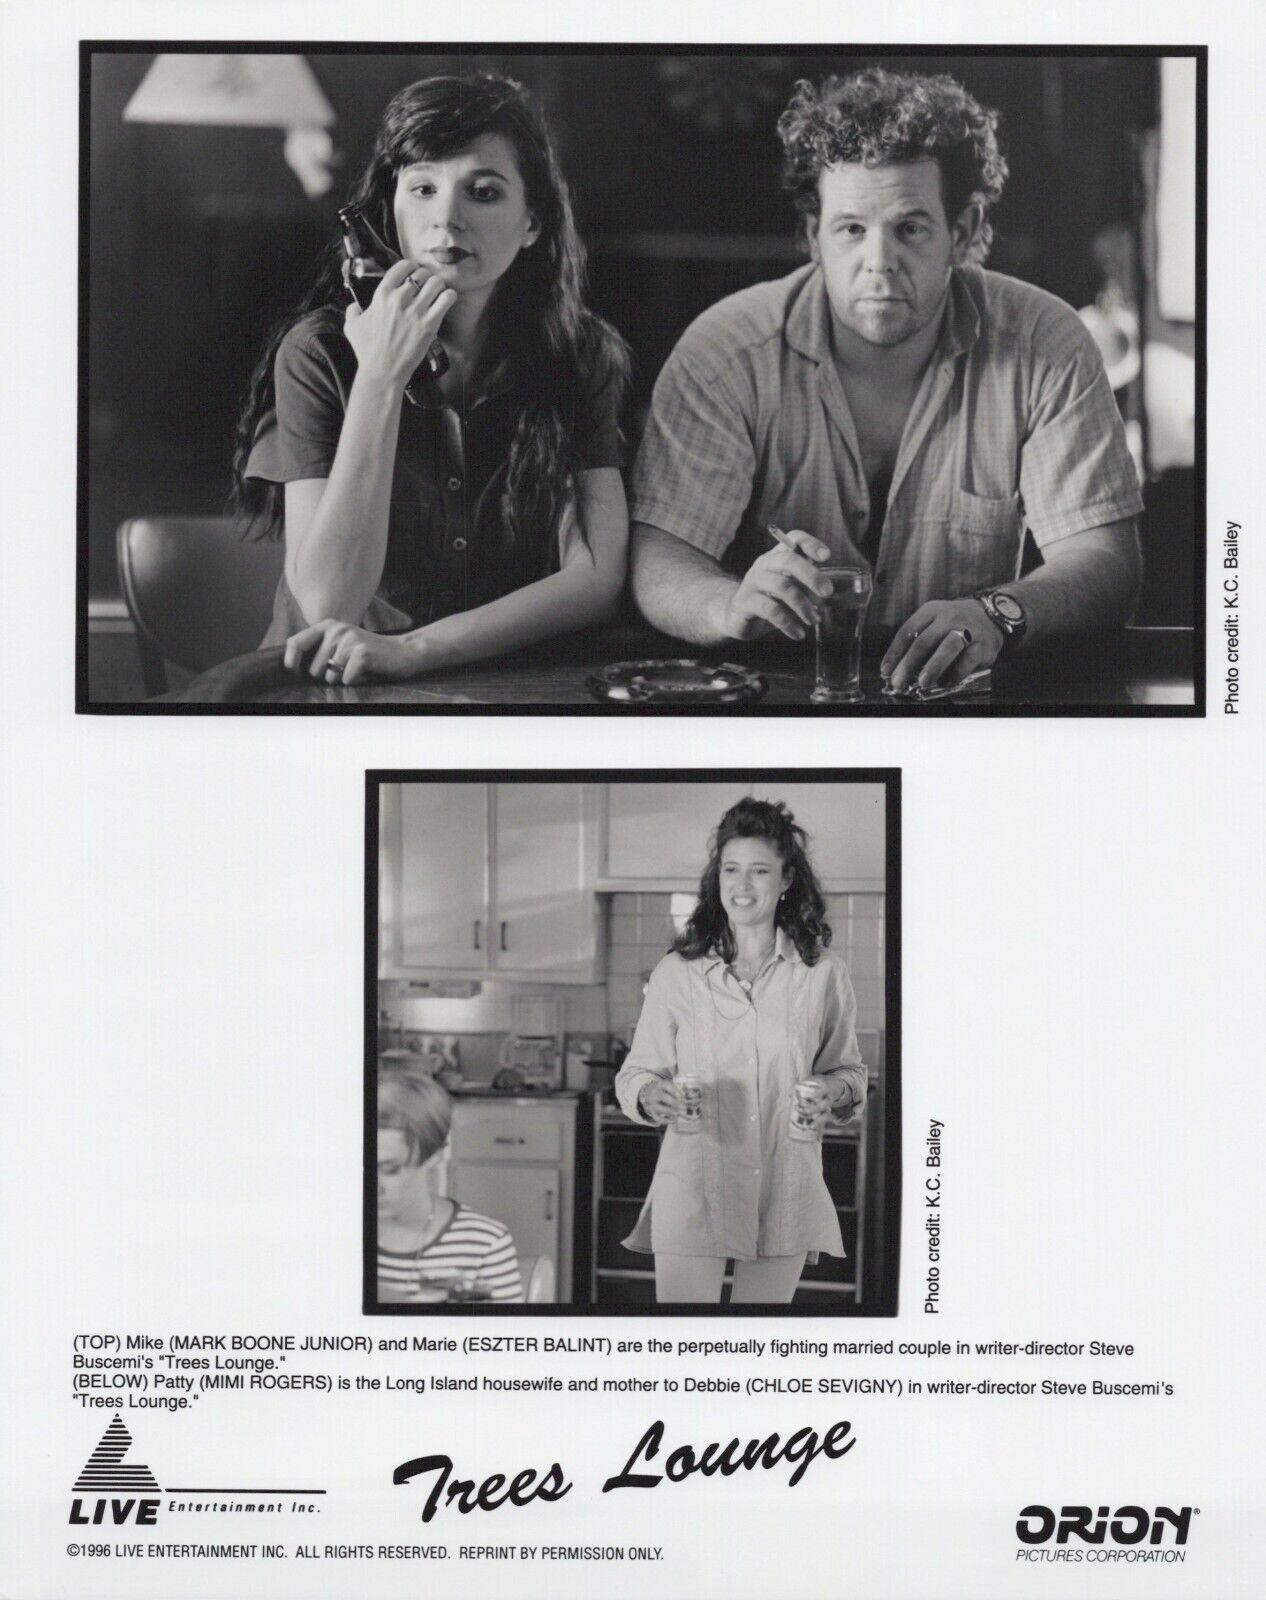 Mark Boone Junior + Eszter Balint + Mimi Rogers + Chloe Sevigny 1996 Photo K 384